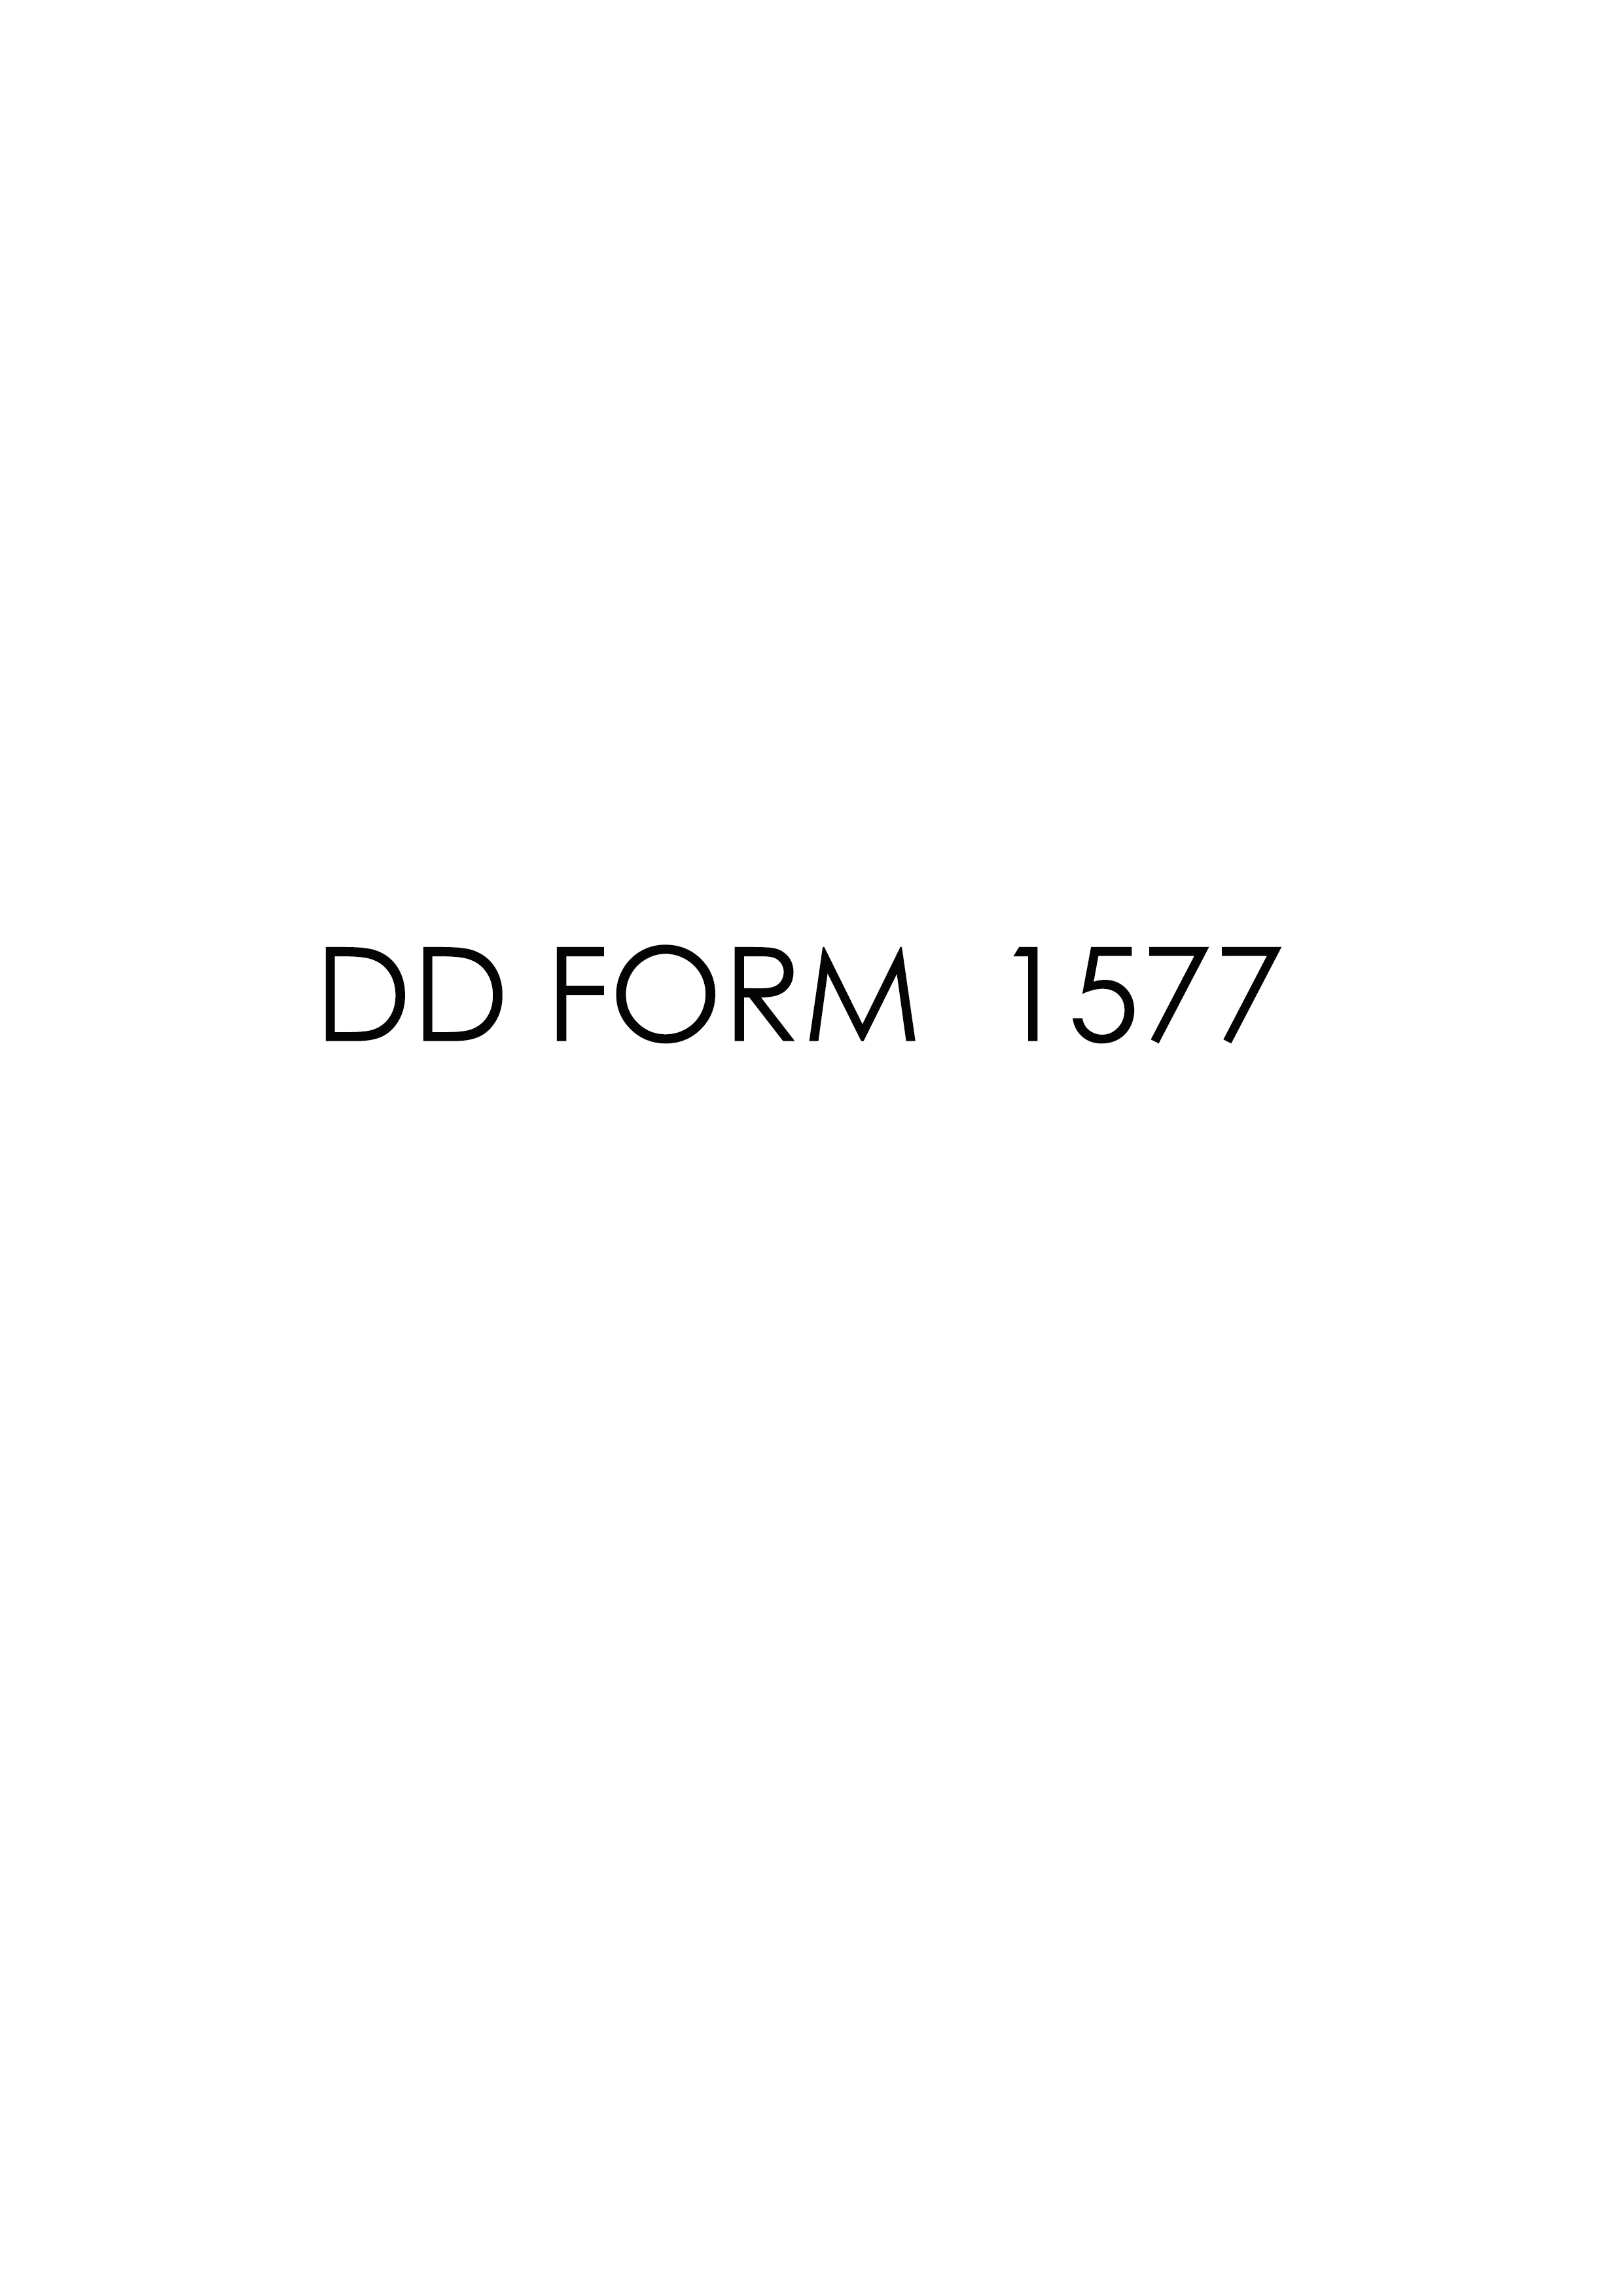 Download dd form 1577